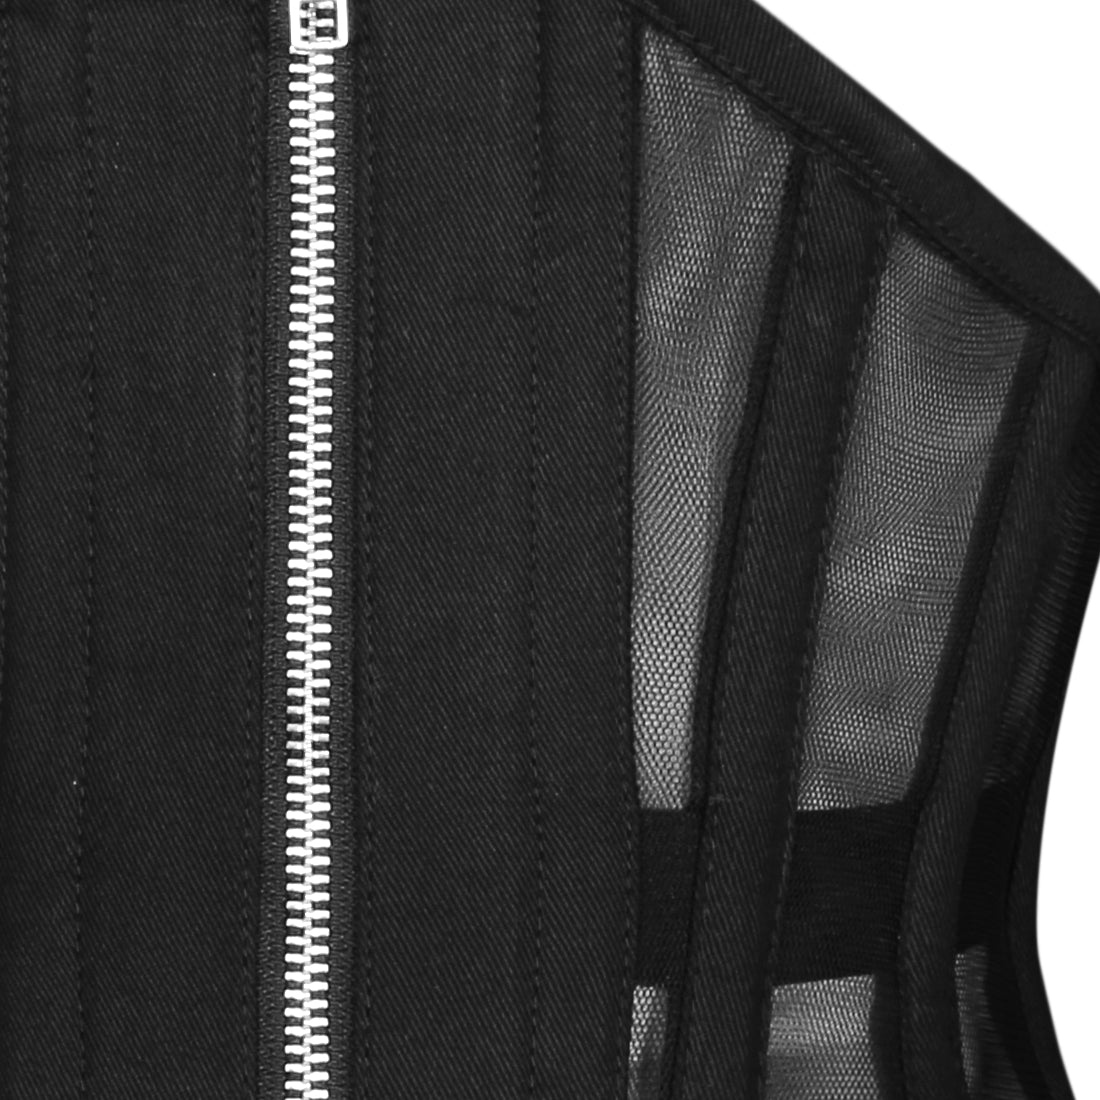 Black net sexy under bust corset